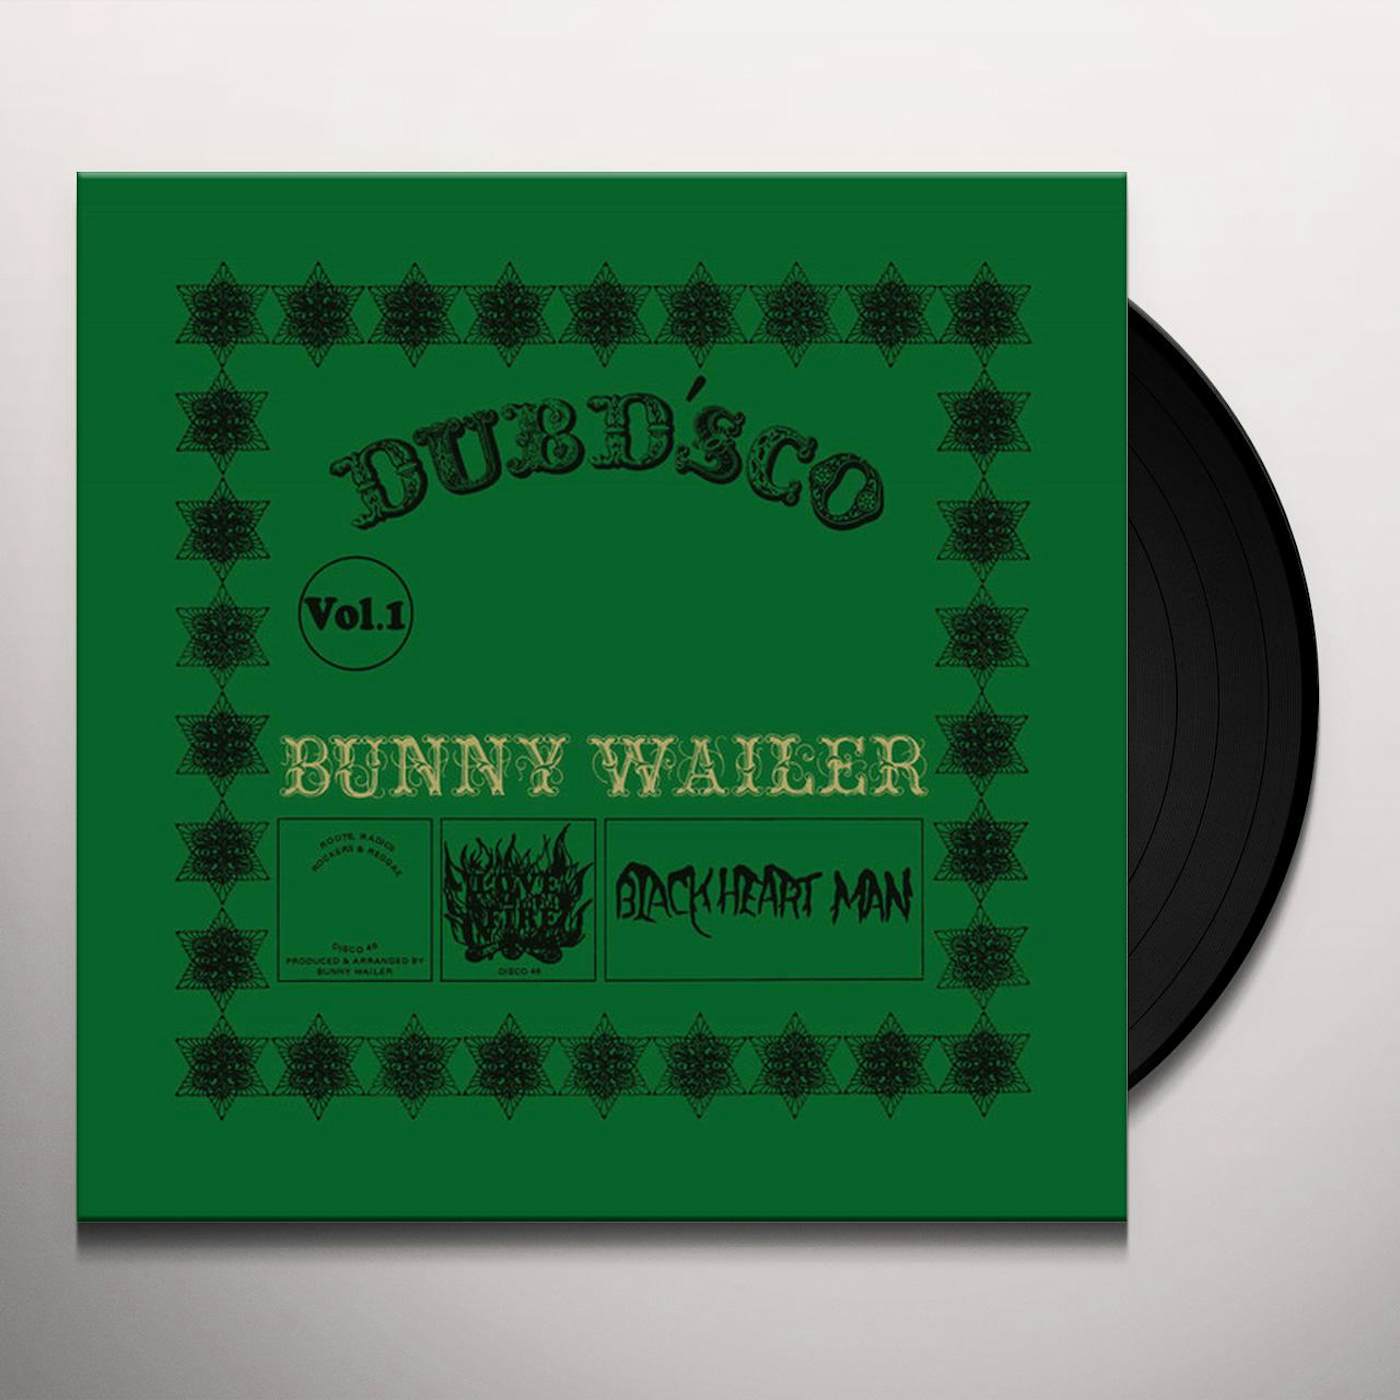 Bunny Wailer DUBD'SCO Vinyl Record